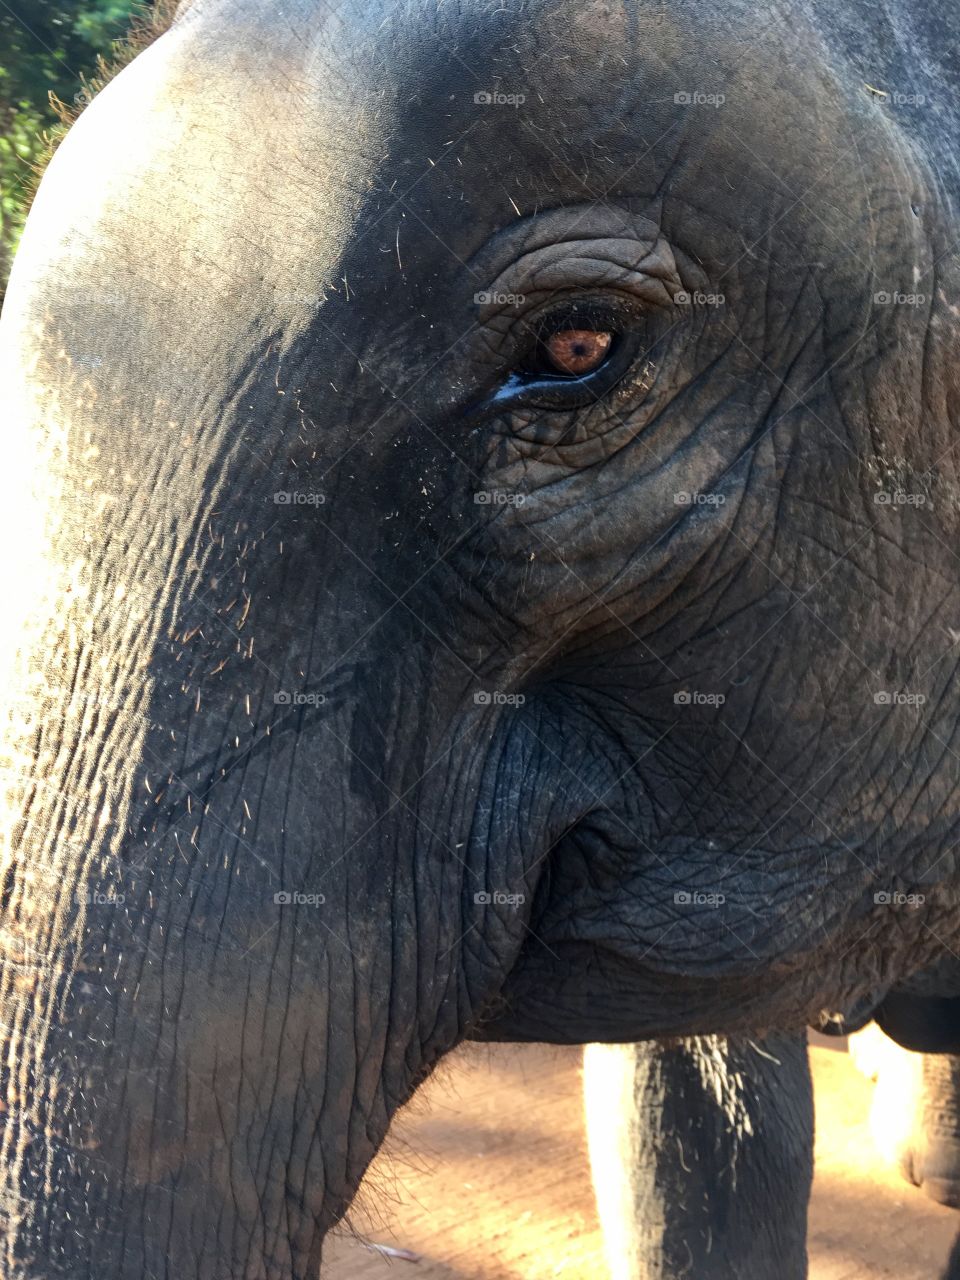 Close up of elephant eye and face